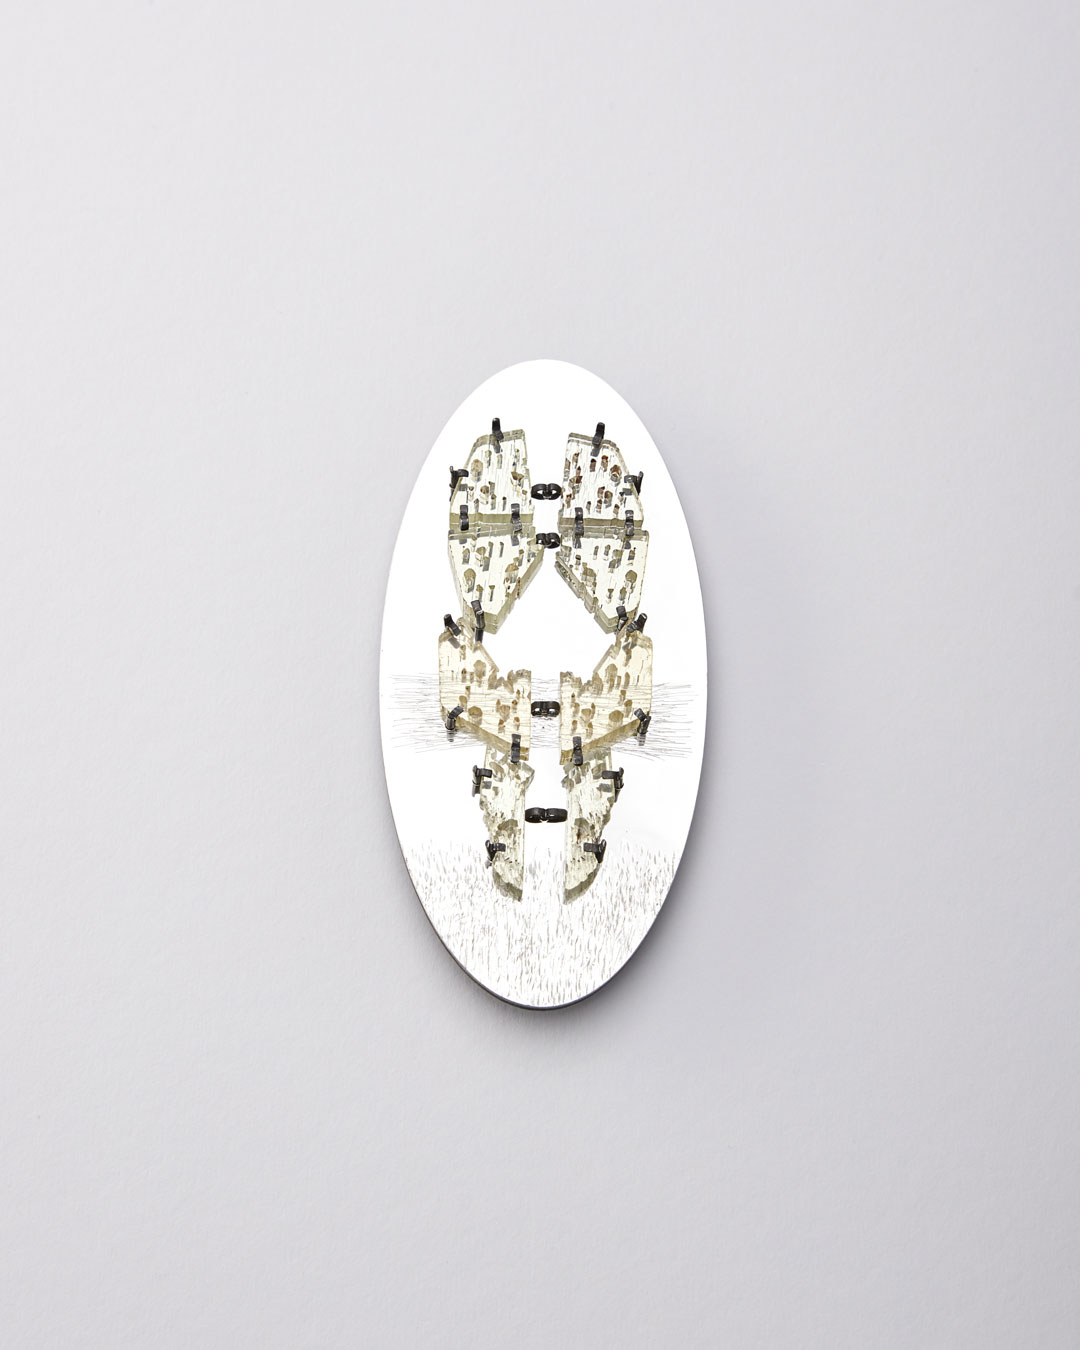 Iris Bodemer, Figur 2 (Figuur 2), 2019, broche; beryl, Alu-Dibond, zilver, montagelijm, 130 x 65 x 15 mm, €4000